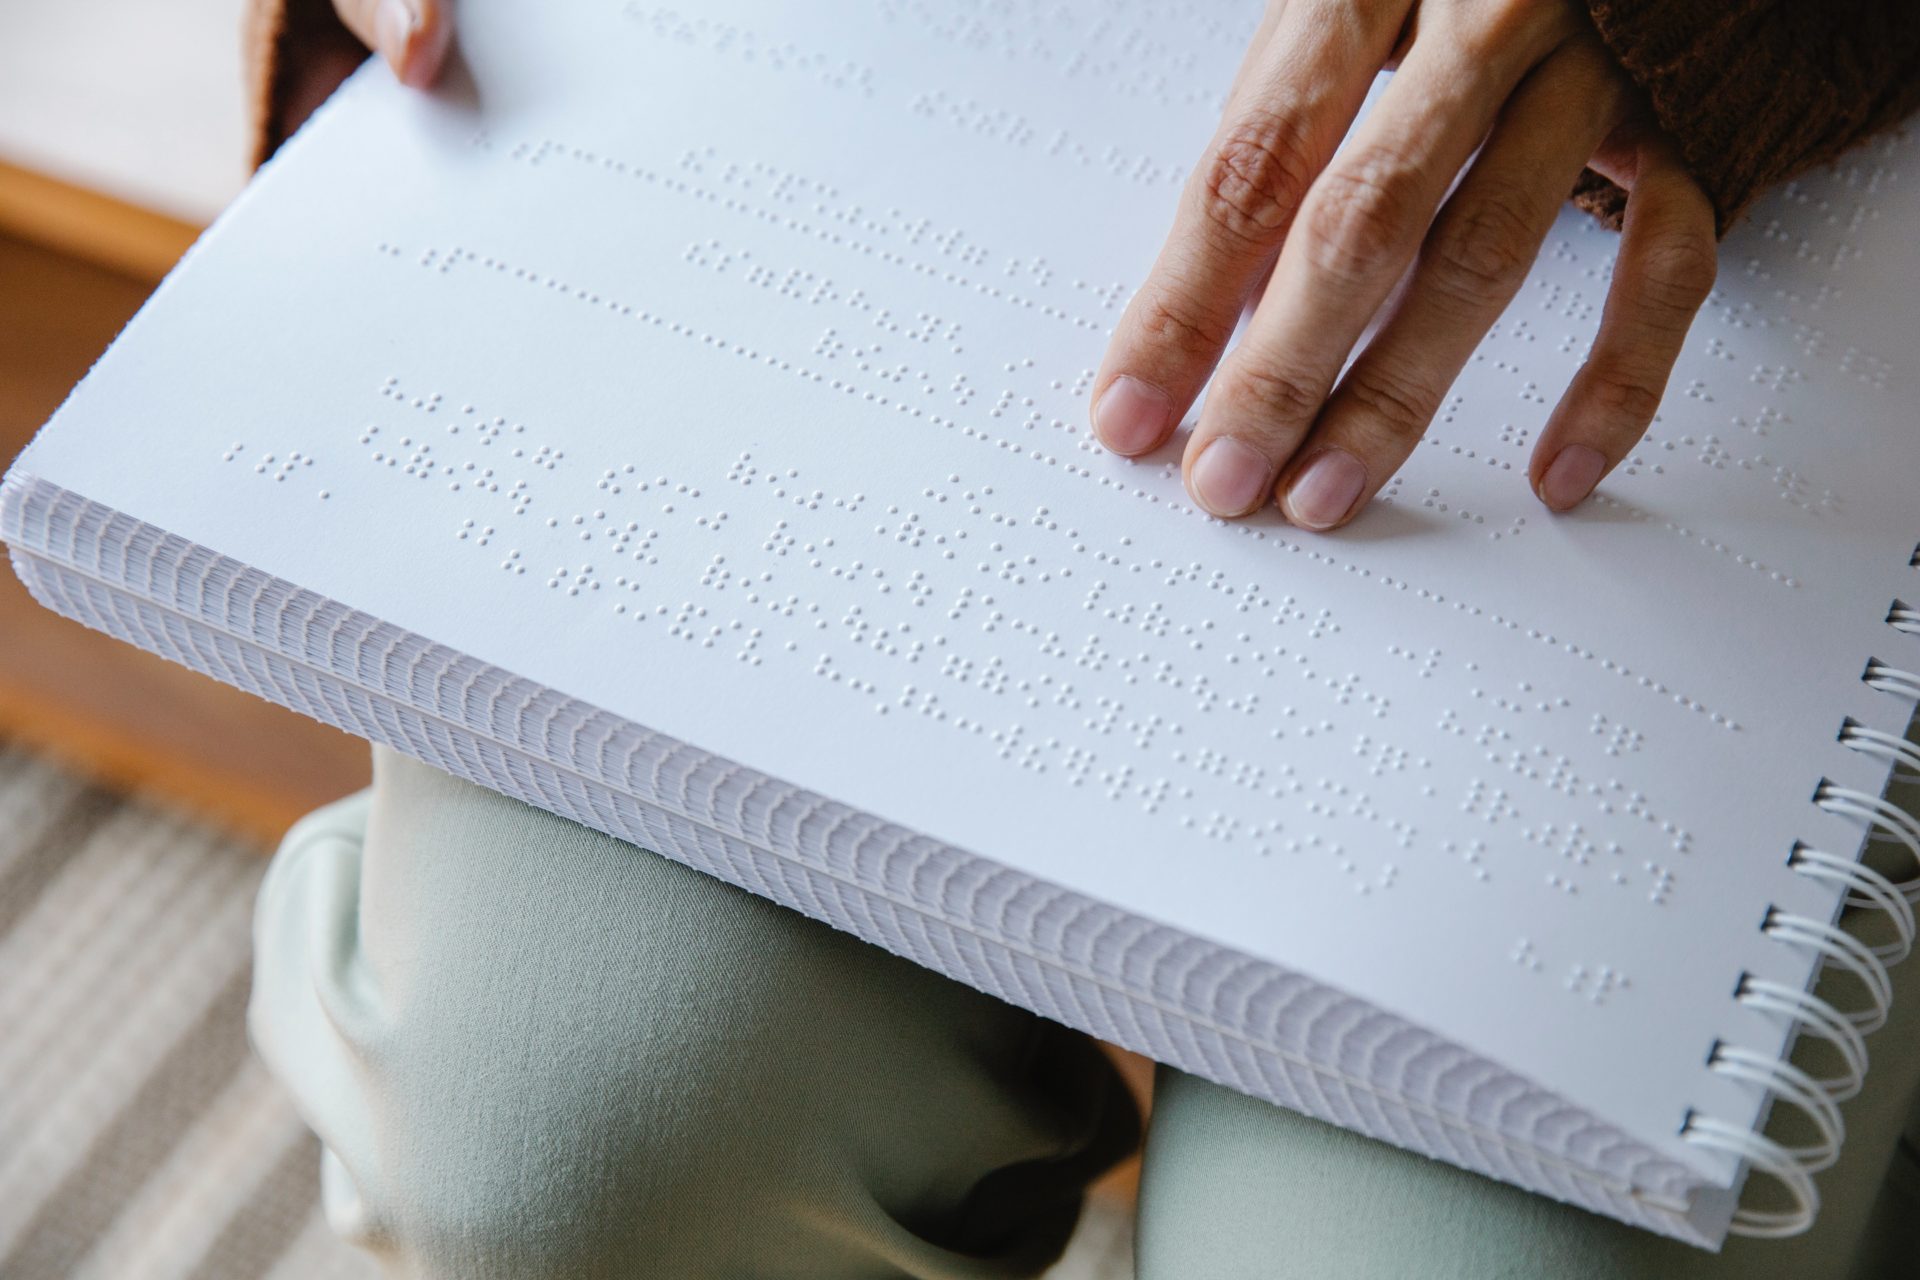 Día Mundial del Braille: cinco curiosidades sobre este sistema de lectoescritura